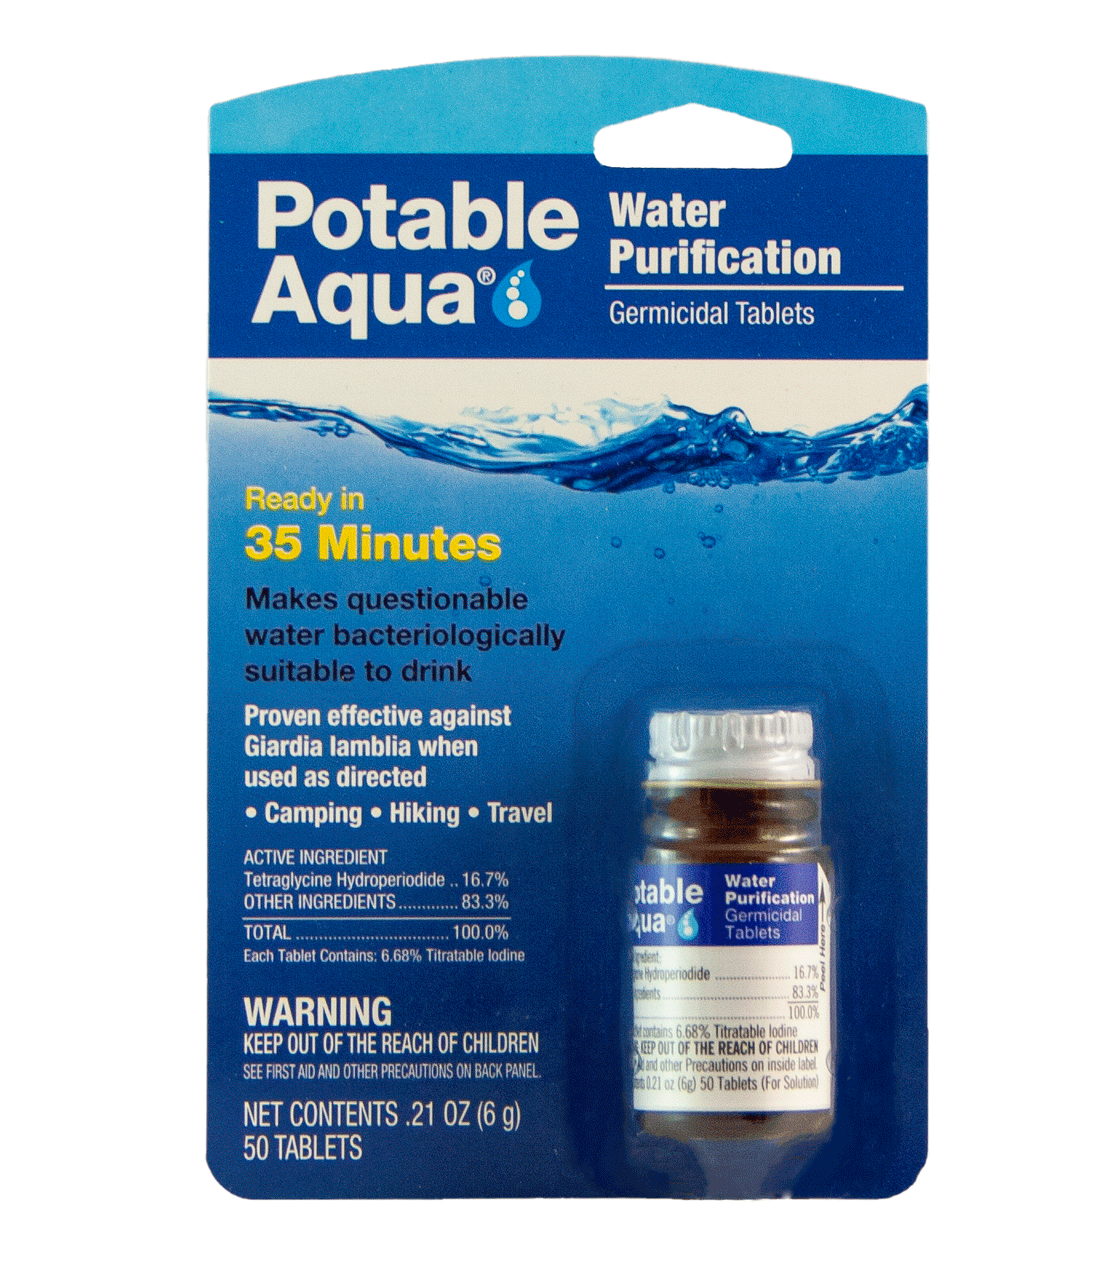 Potable Aqua Water Purification